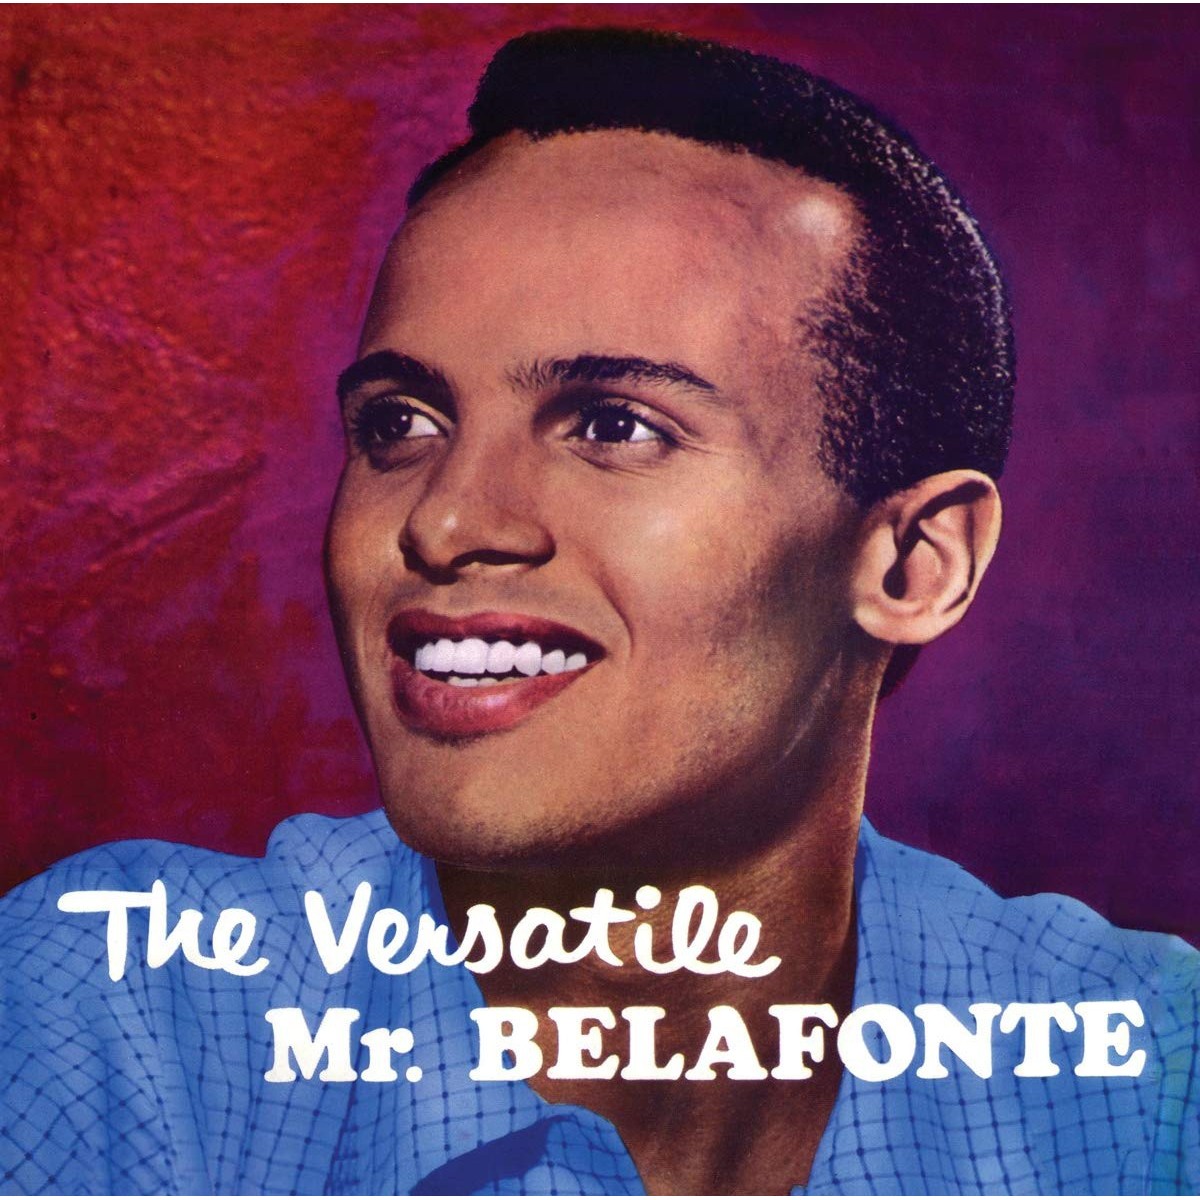 Harry Belafonte - The Versatile Mr. Belafonte